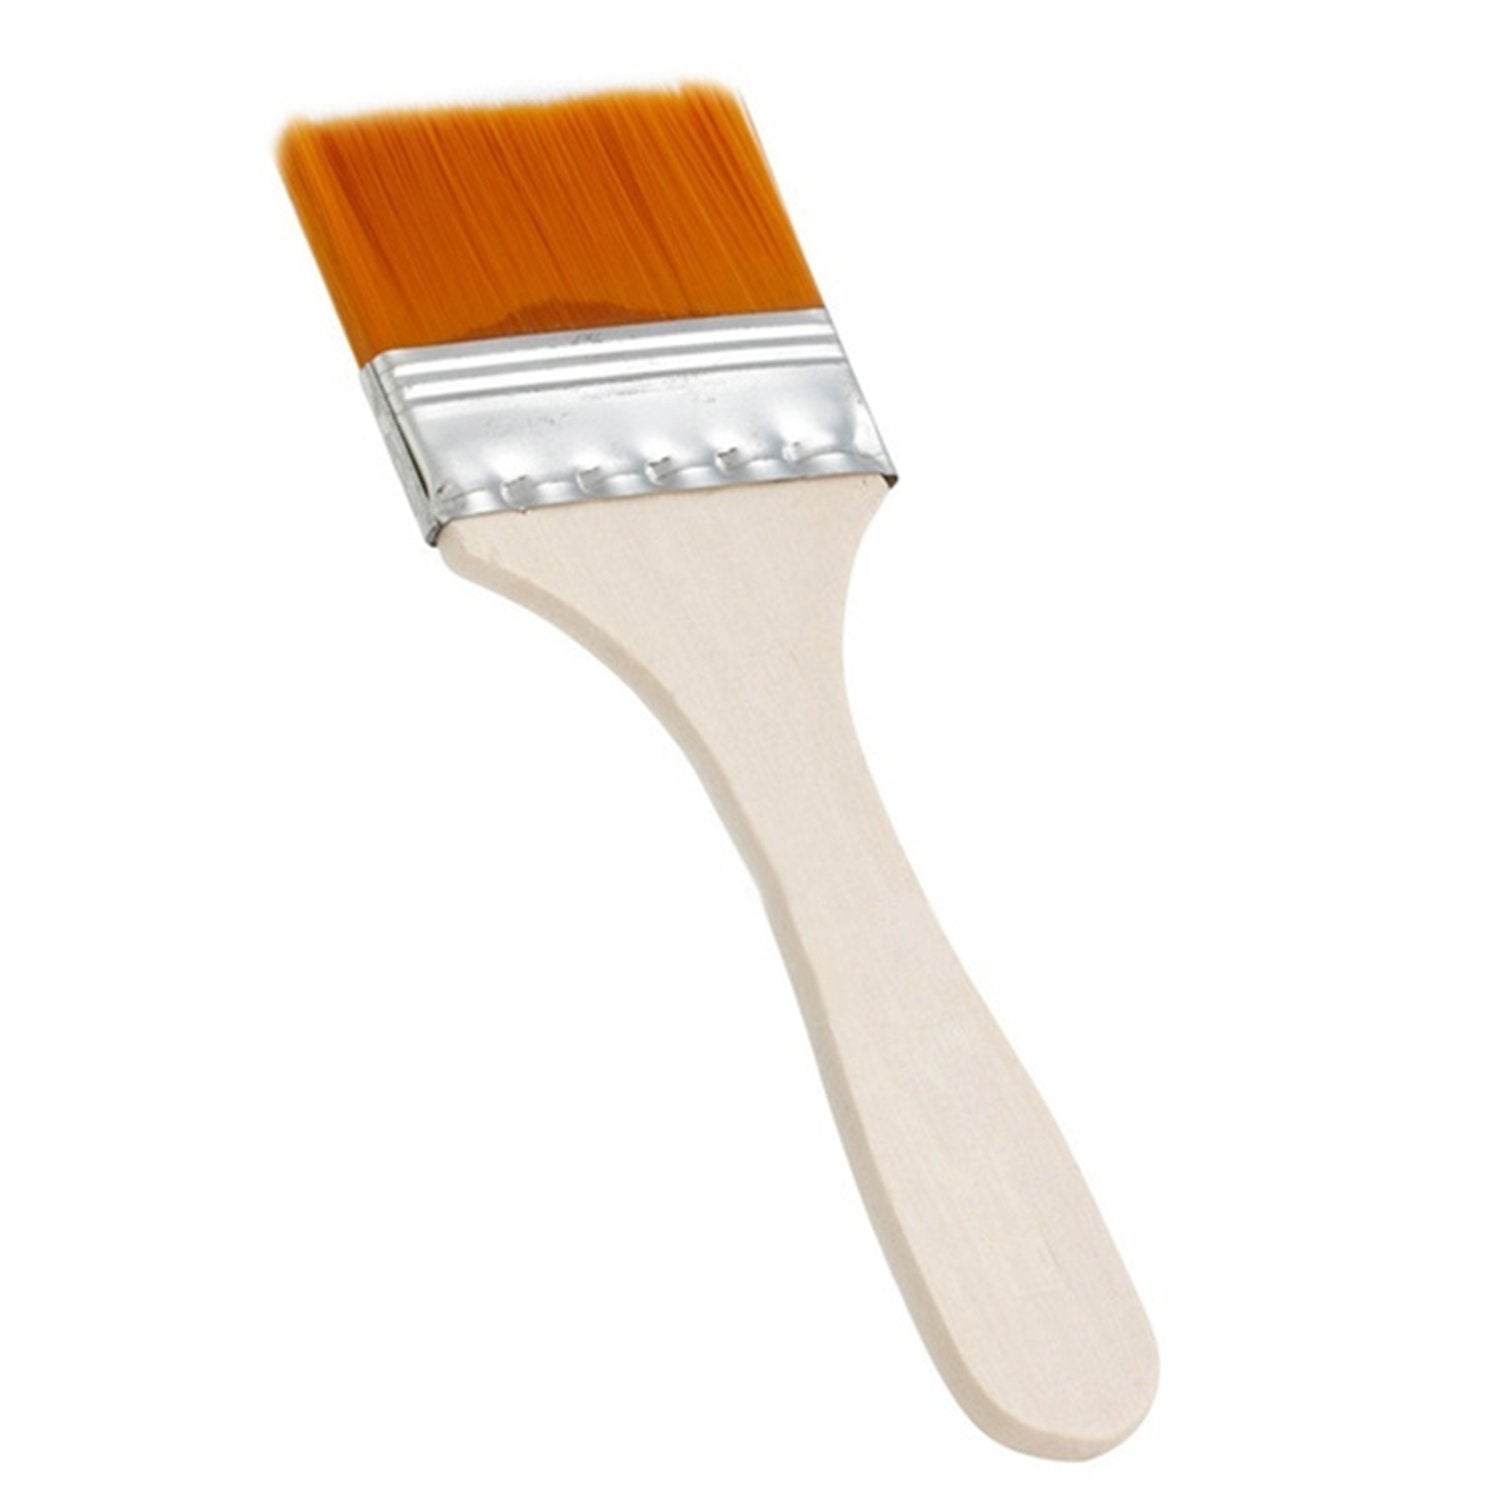 4674 Artistic Flat Painting Brush